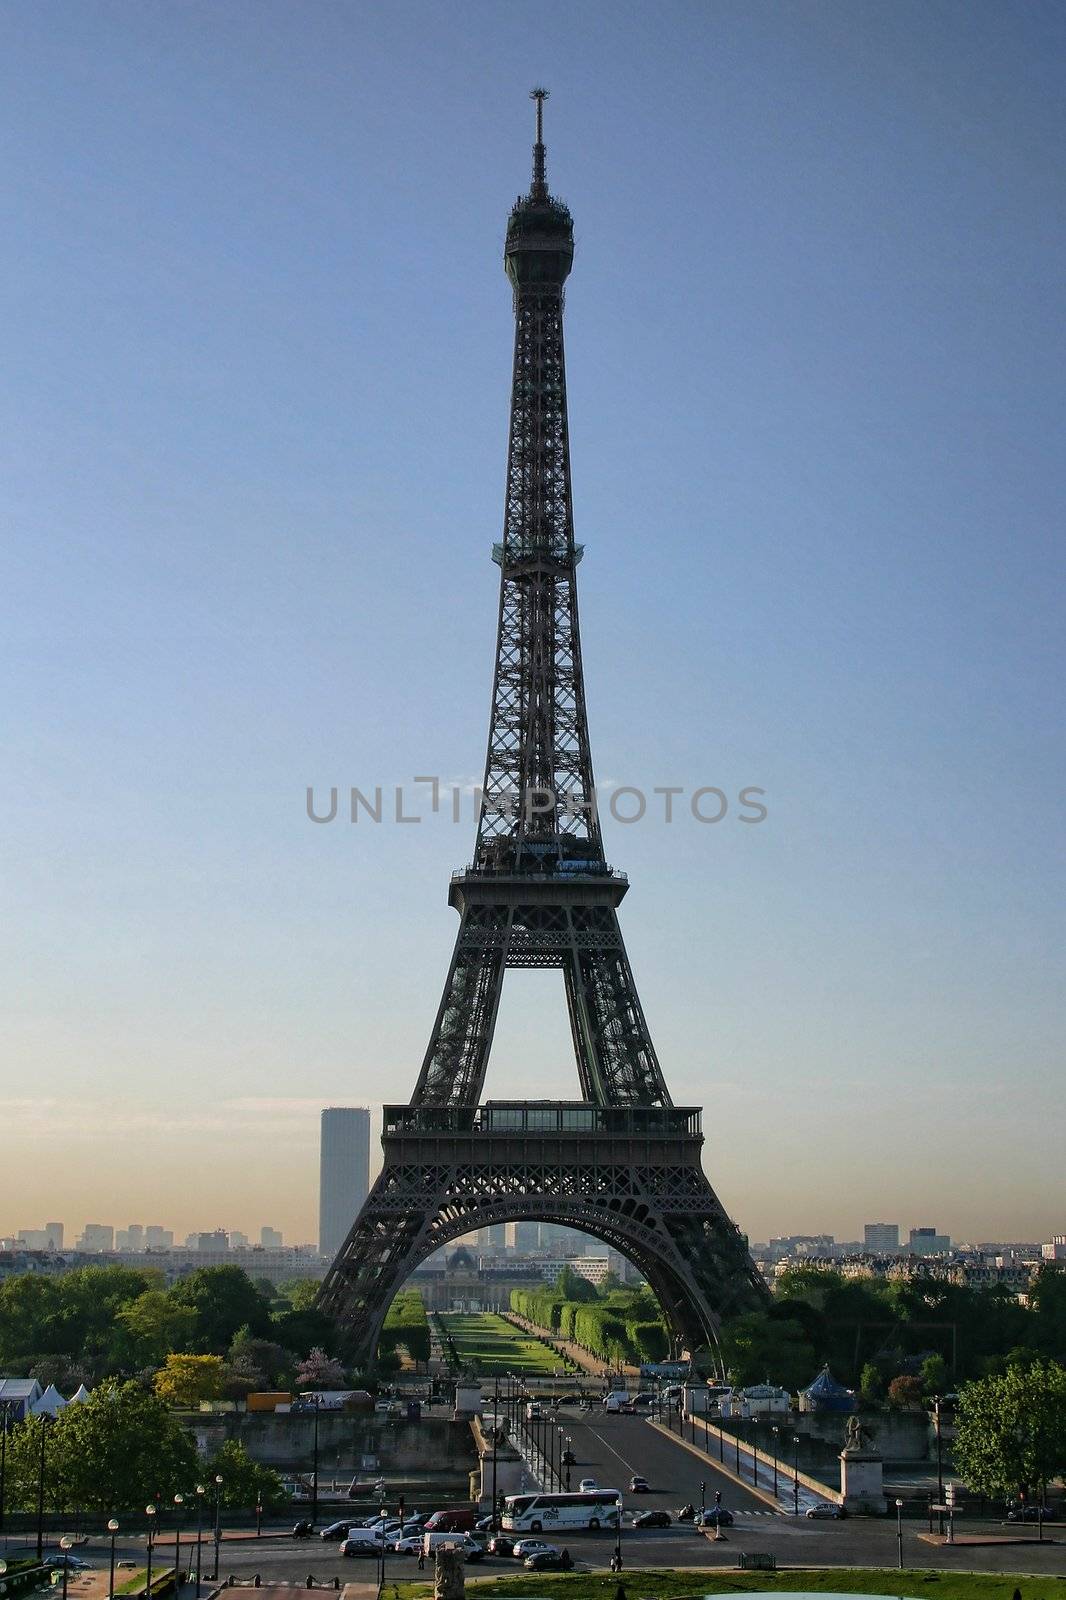 eiffel tower - Paris France by artush